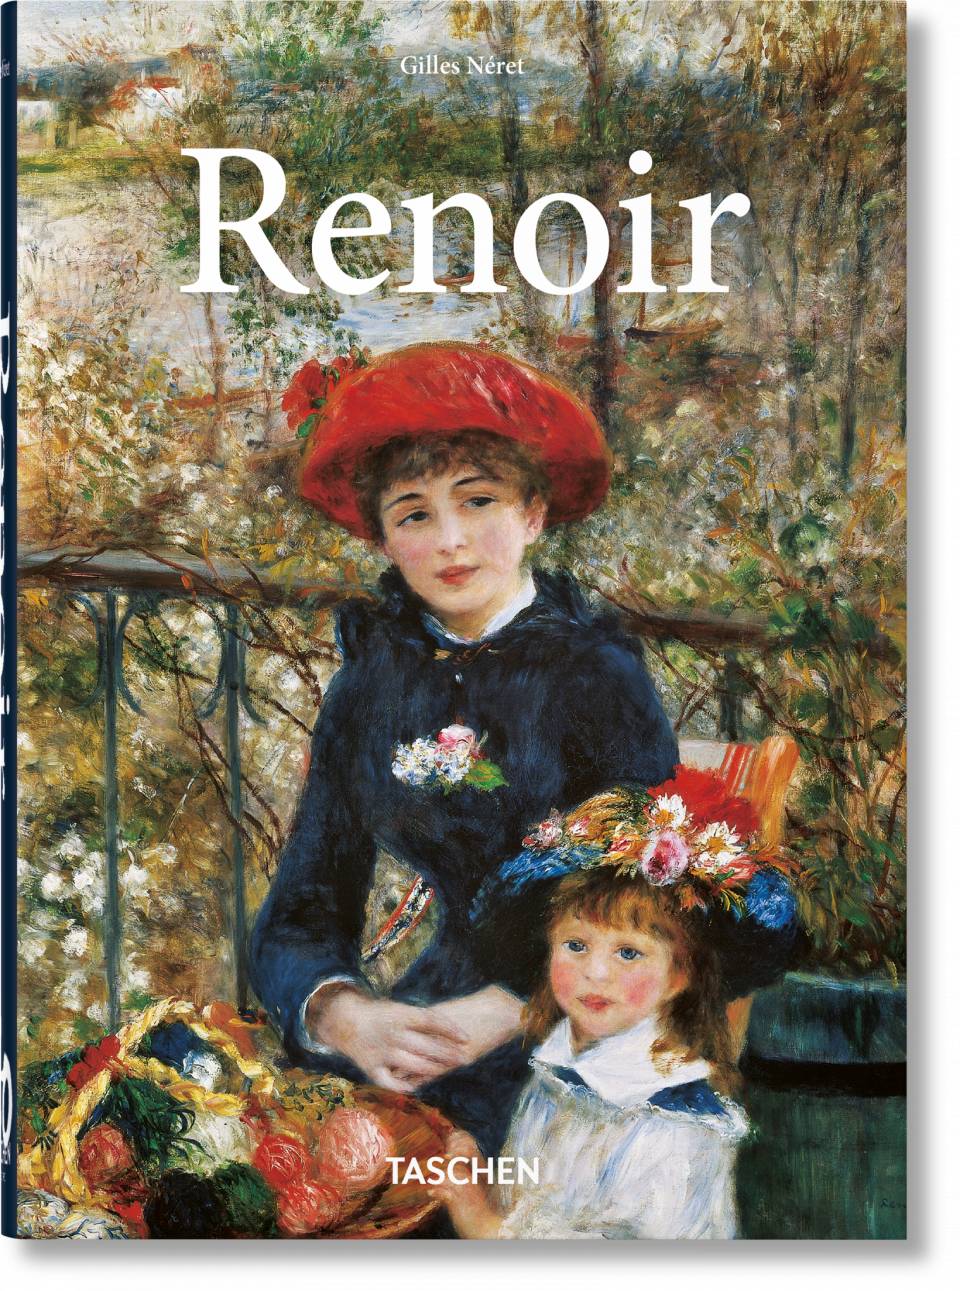 Renoir 40th Edition